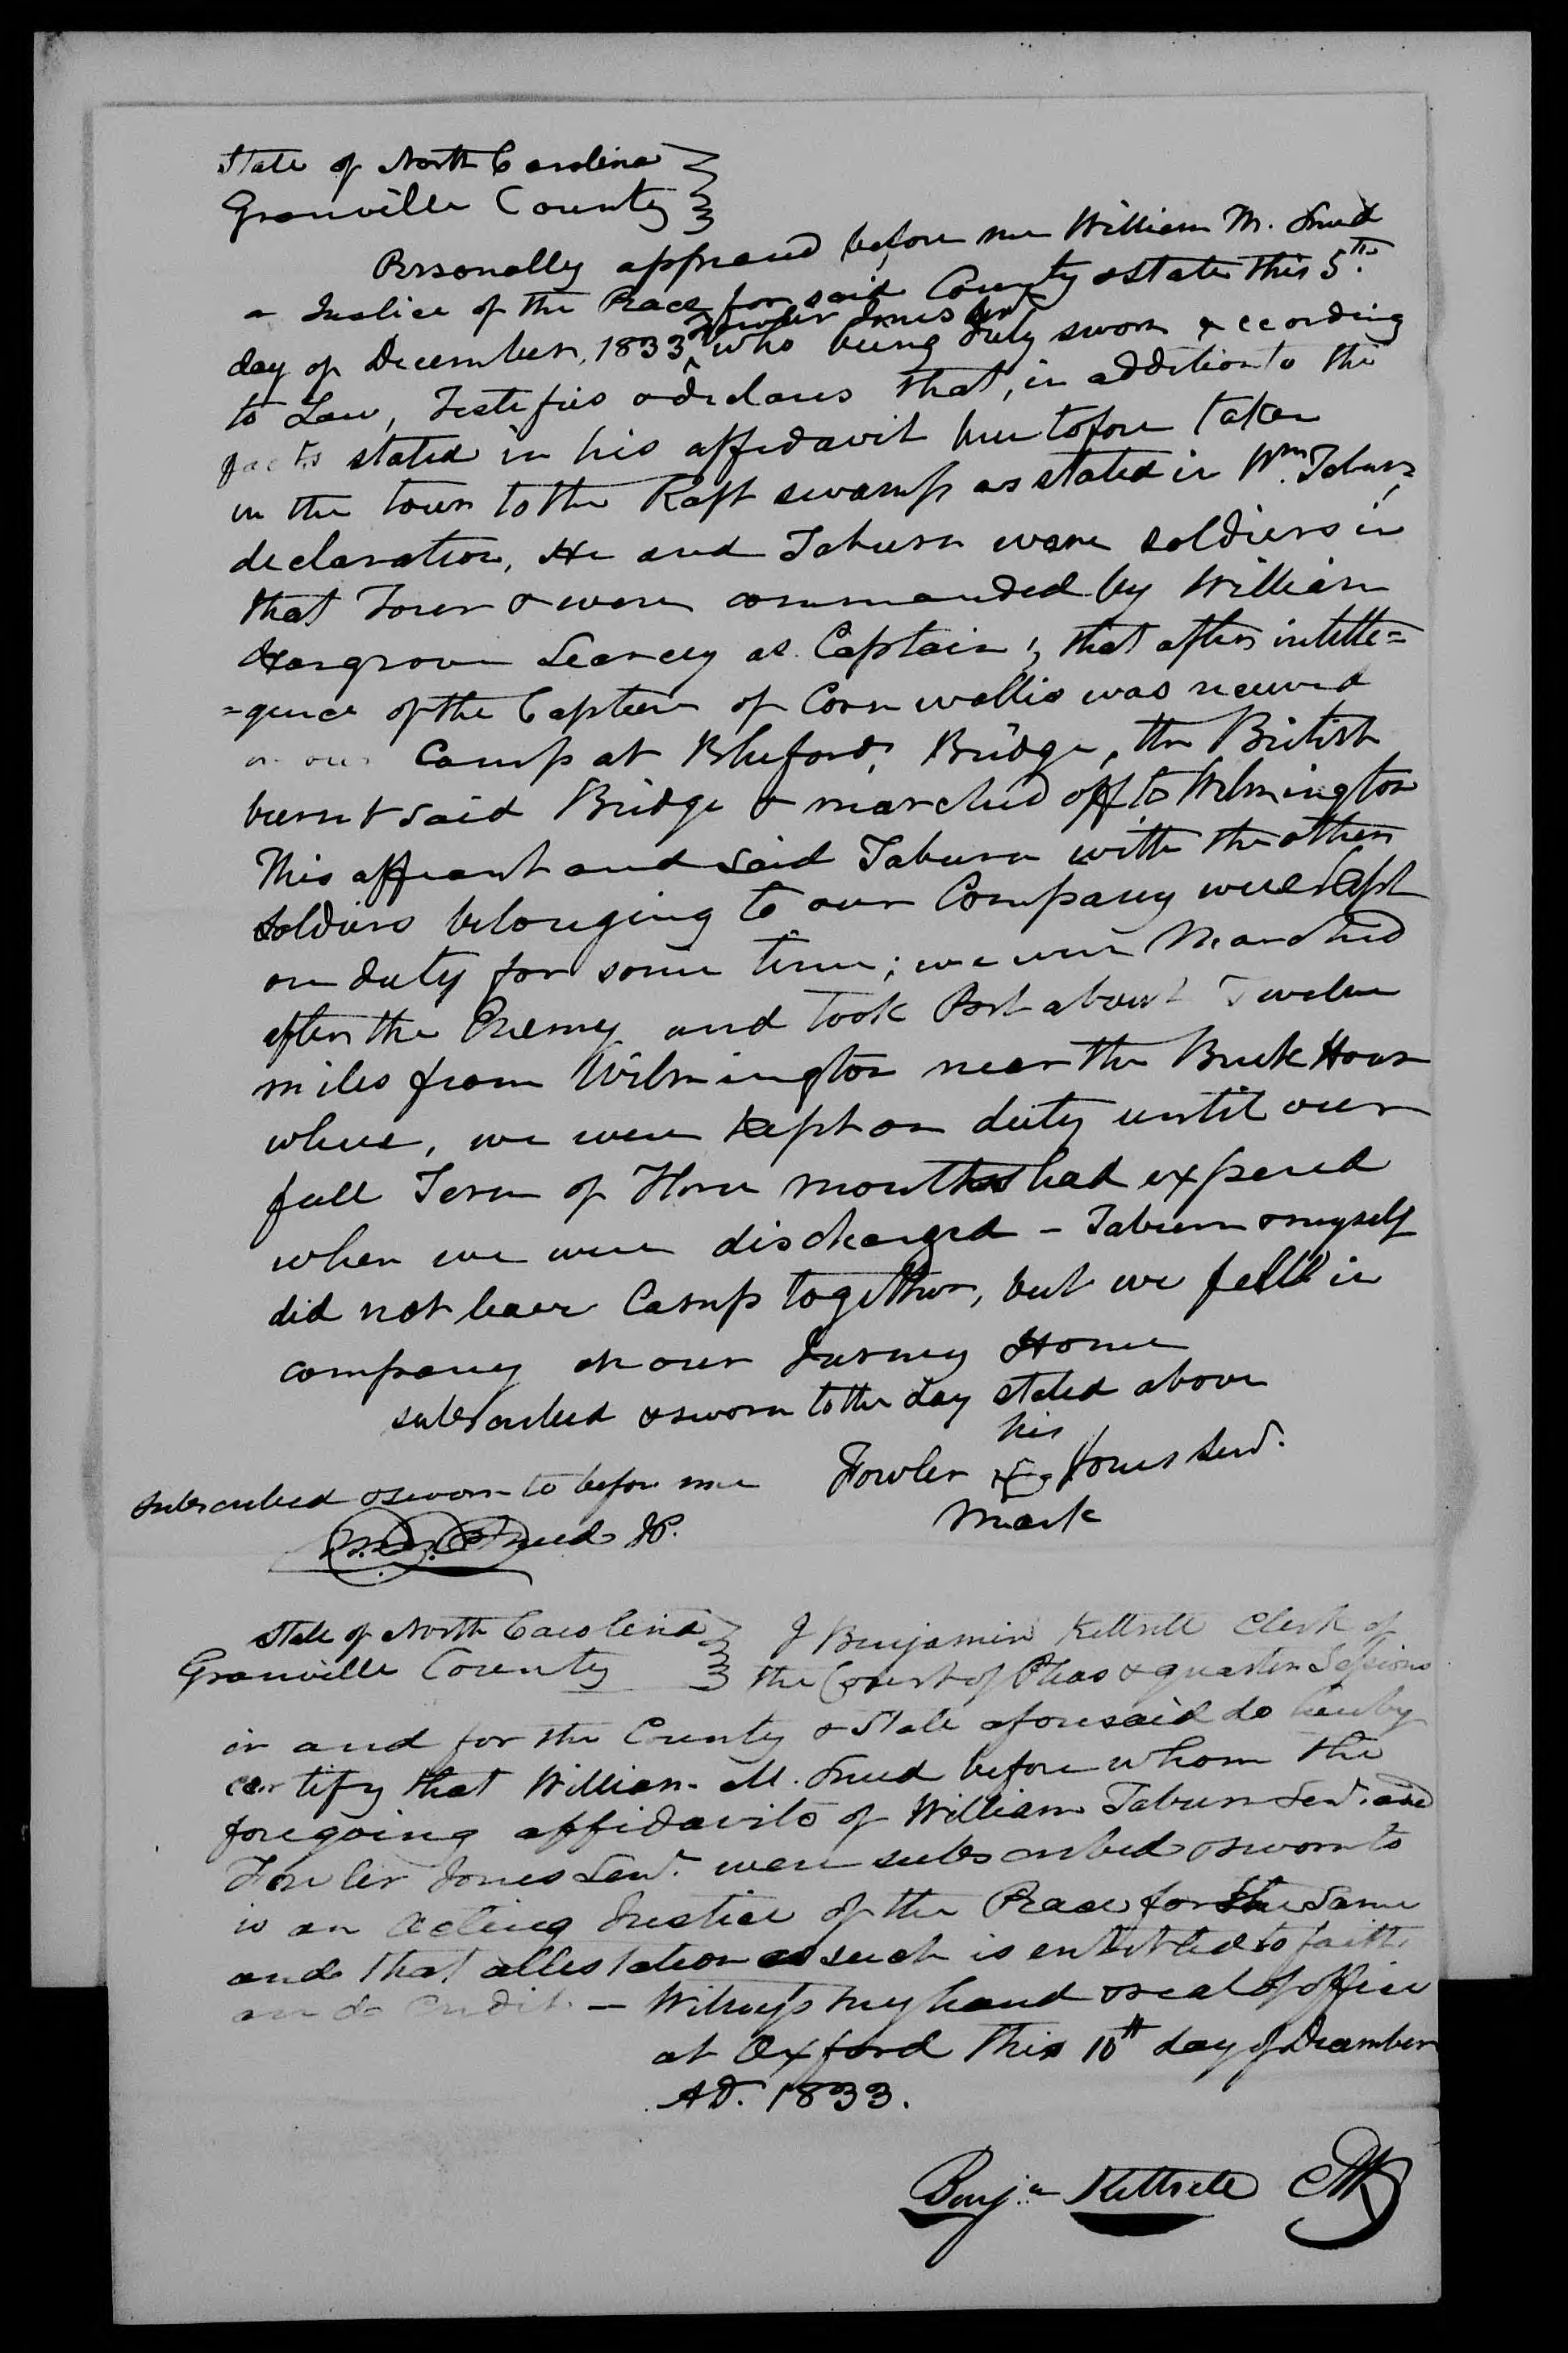 Affidavit of Fowler Jones in support of a Pension Claim for William Taburn, 5 December 1833